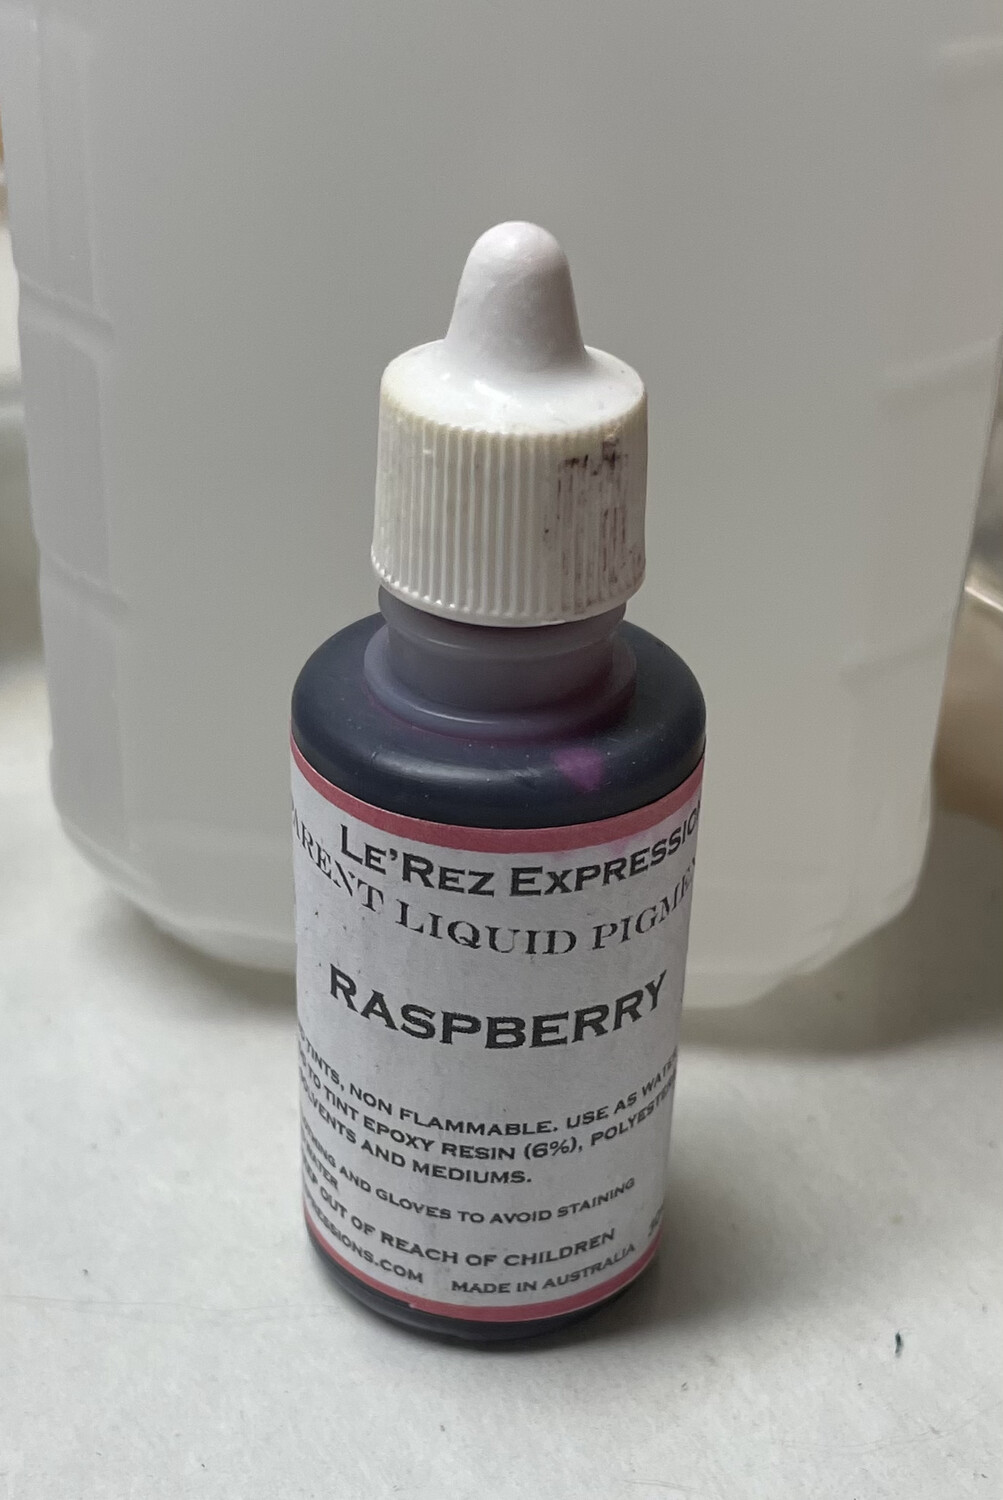 Raspberry Liquid Tint 1oz